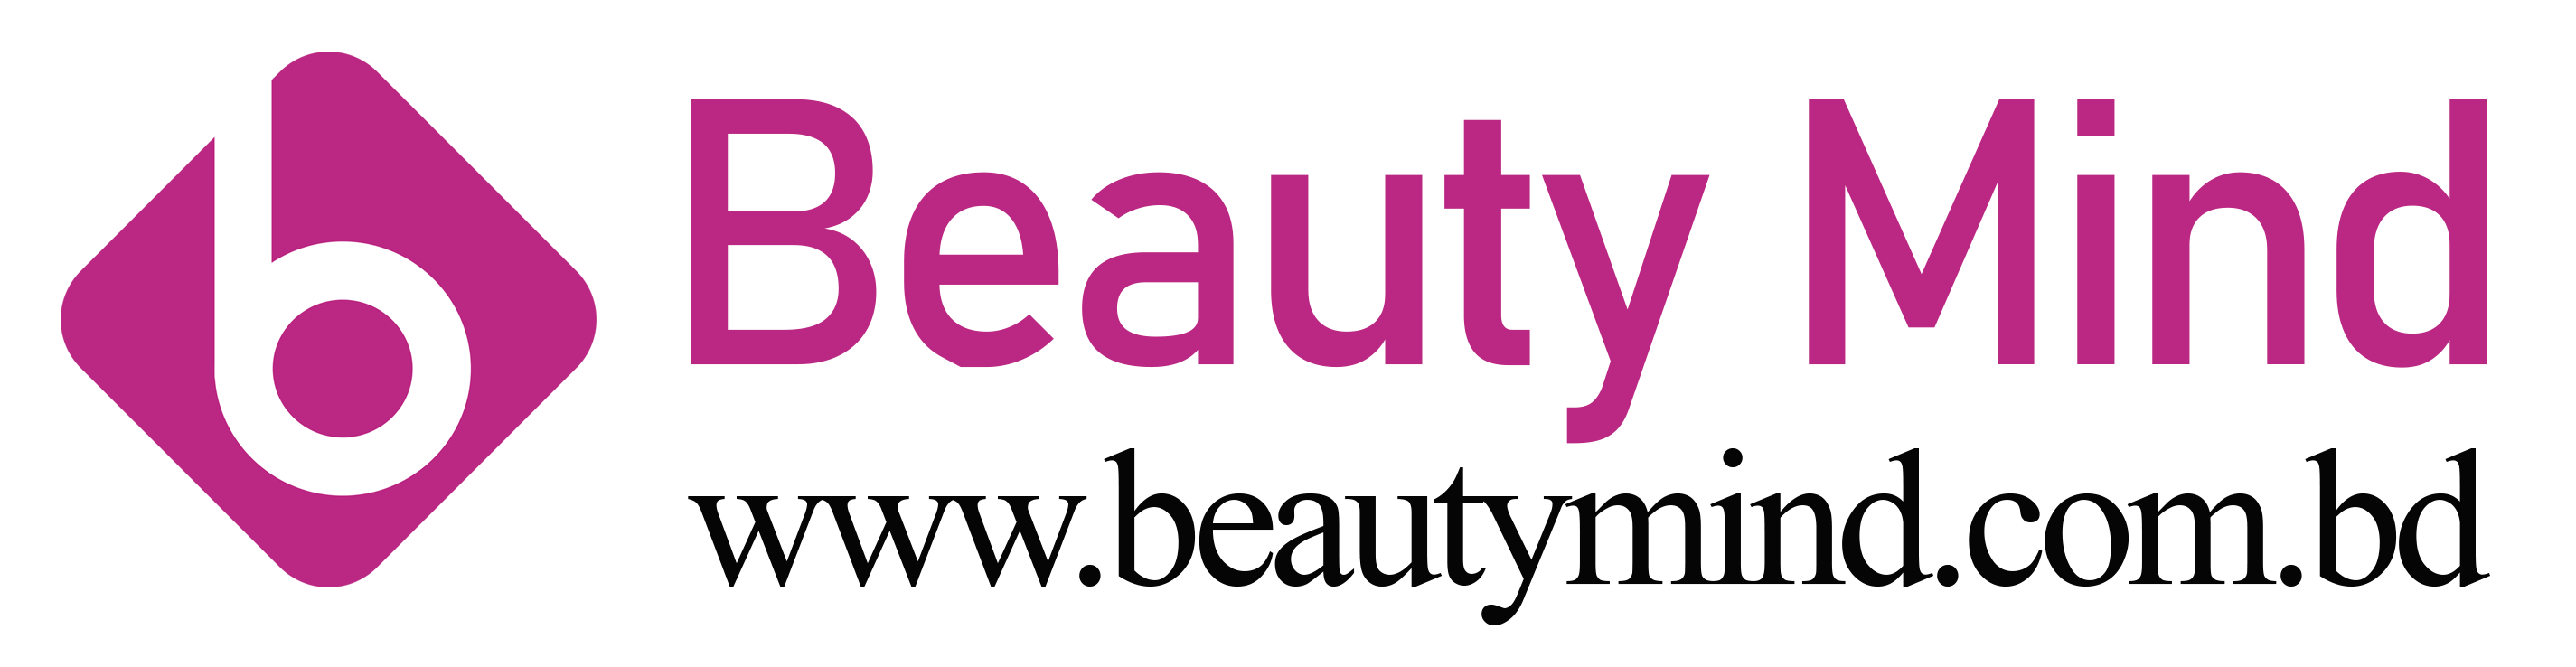 Beauty Mind ll Beauty & Cosmetics Store in Bangladesh